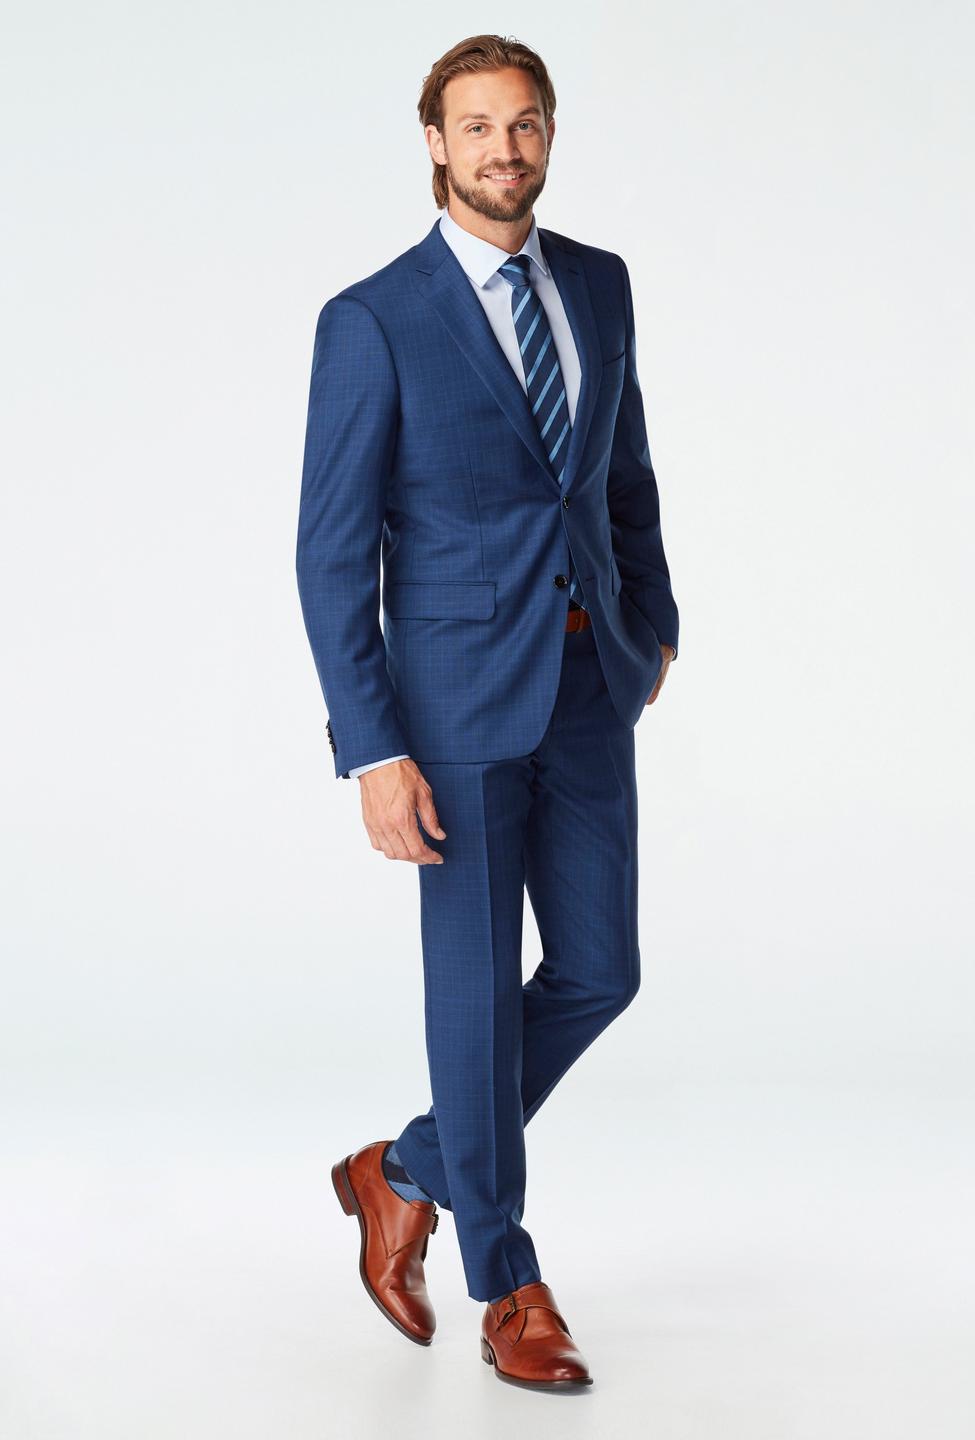 Blue blazer - Harrogate Checked Design from Luxury Indochino Collection